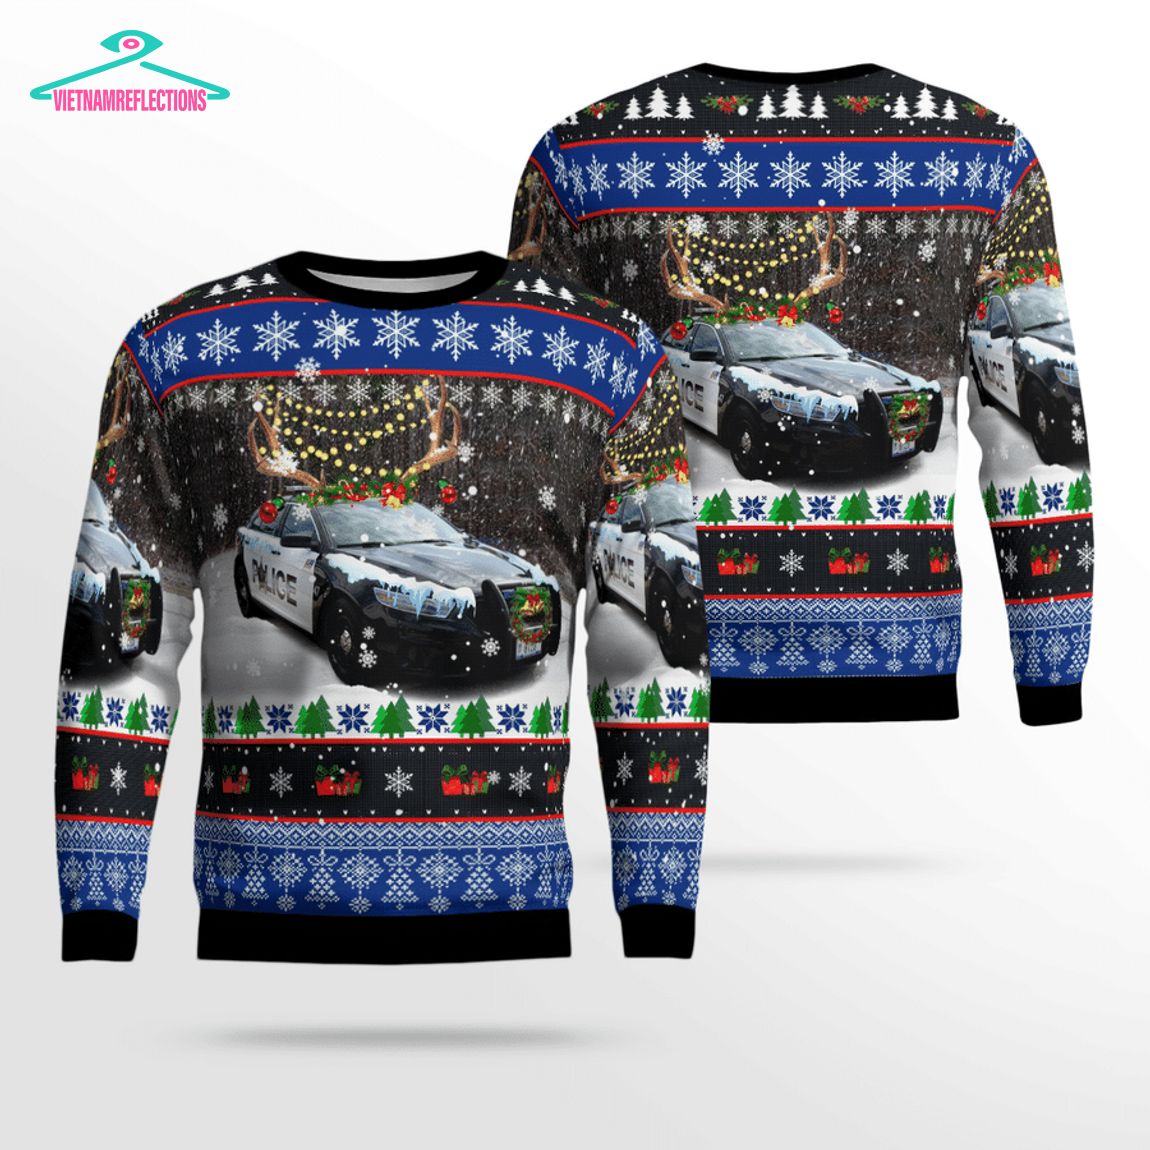 Woodridge Police Department 3D Christmas Sweater